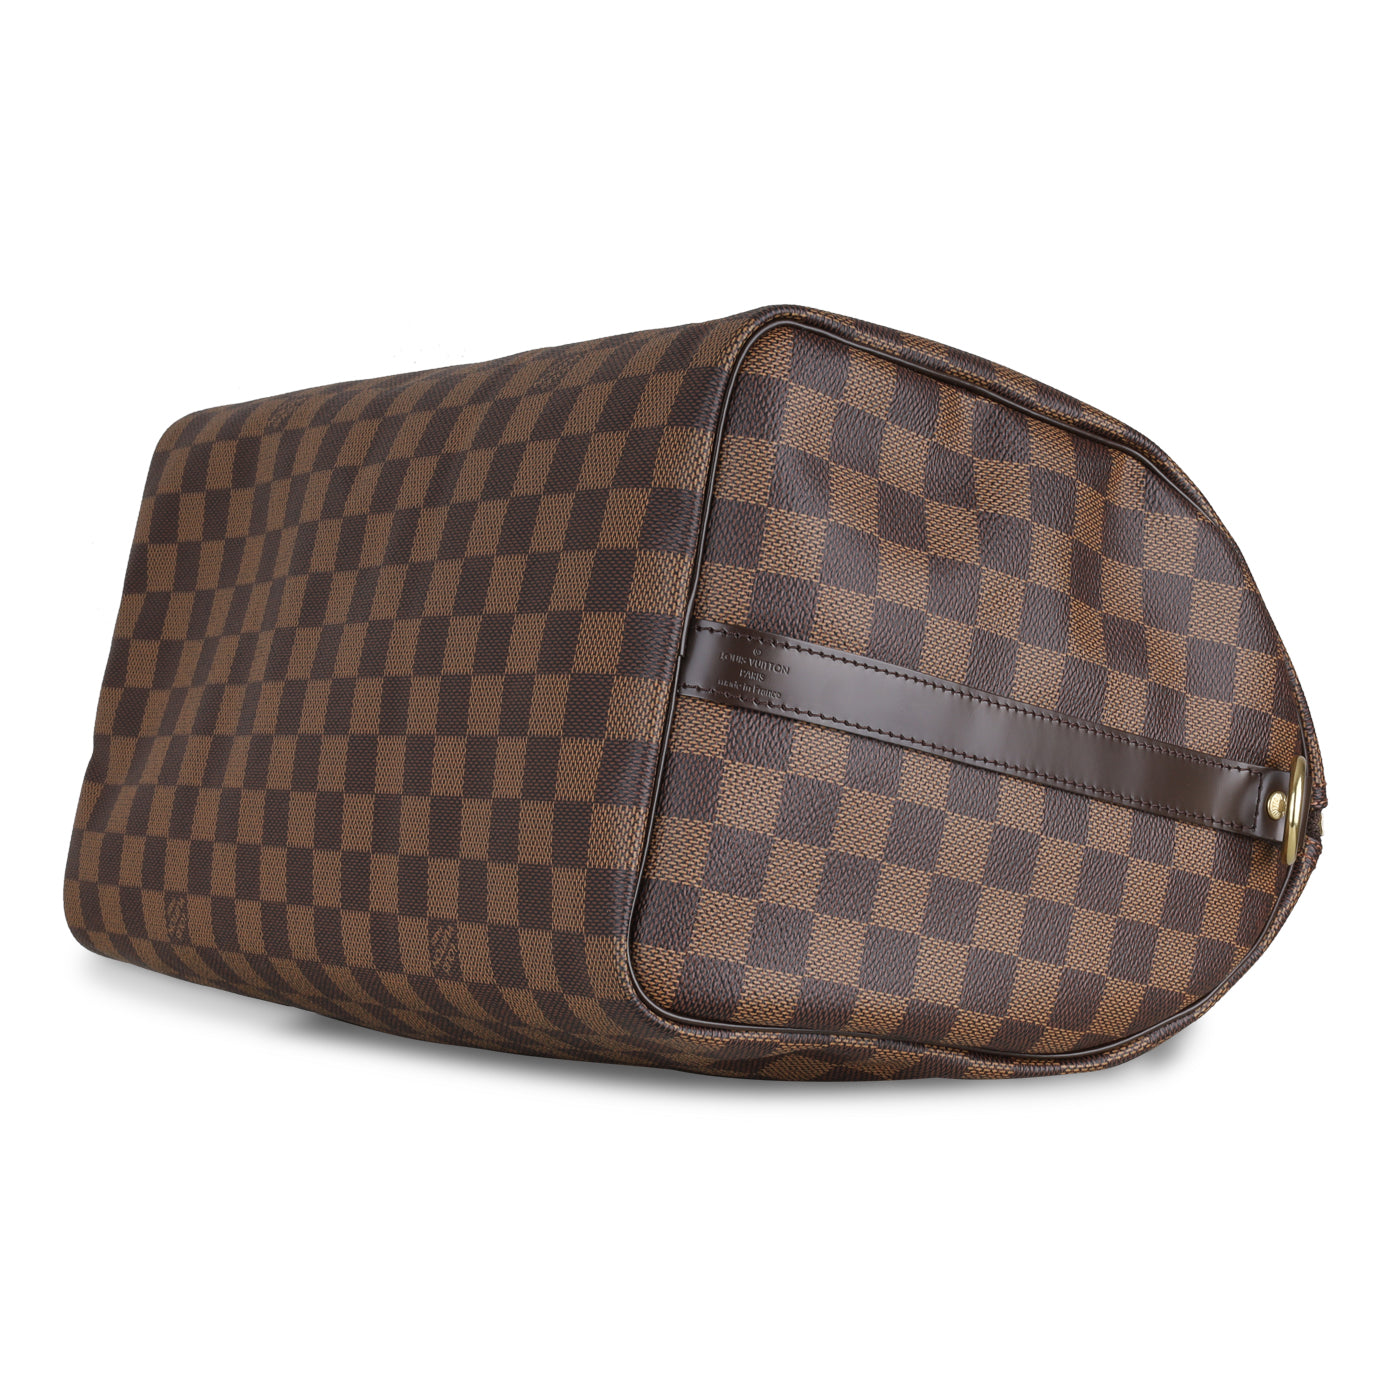 Louis Vuitton, Bags, Speedy B 35 Damier Ebene Made In France Pristine  Condition